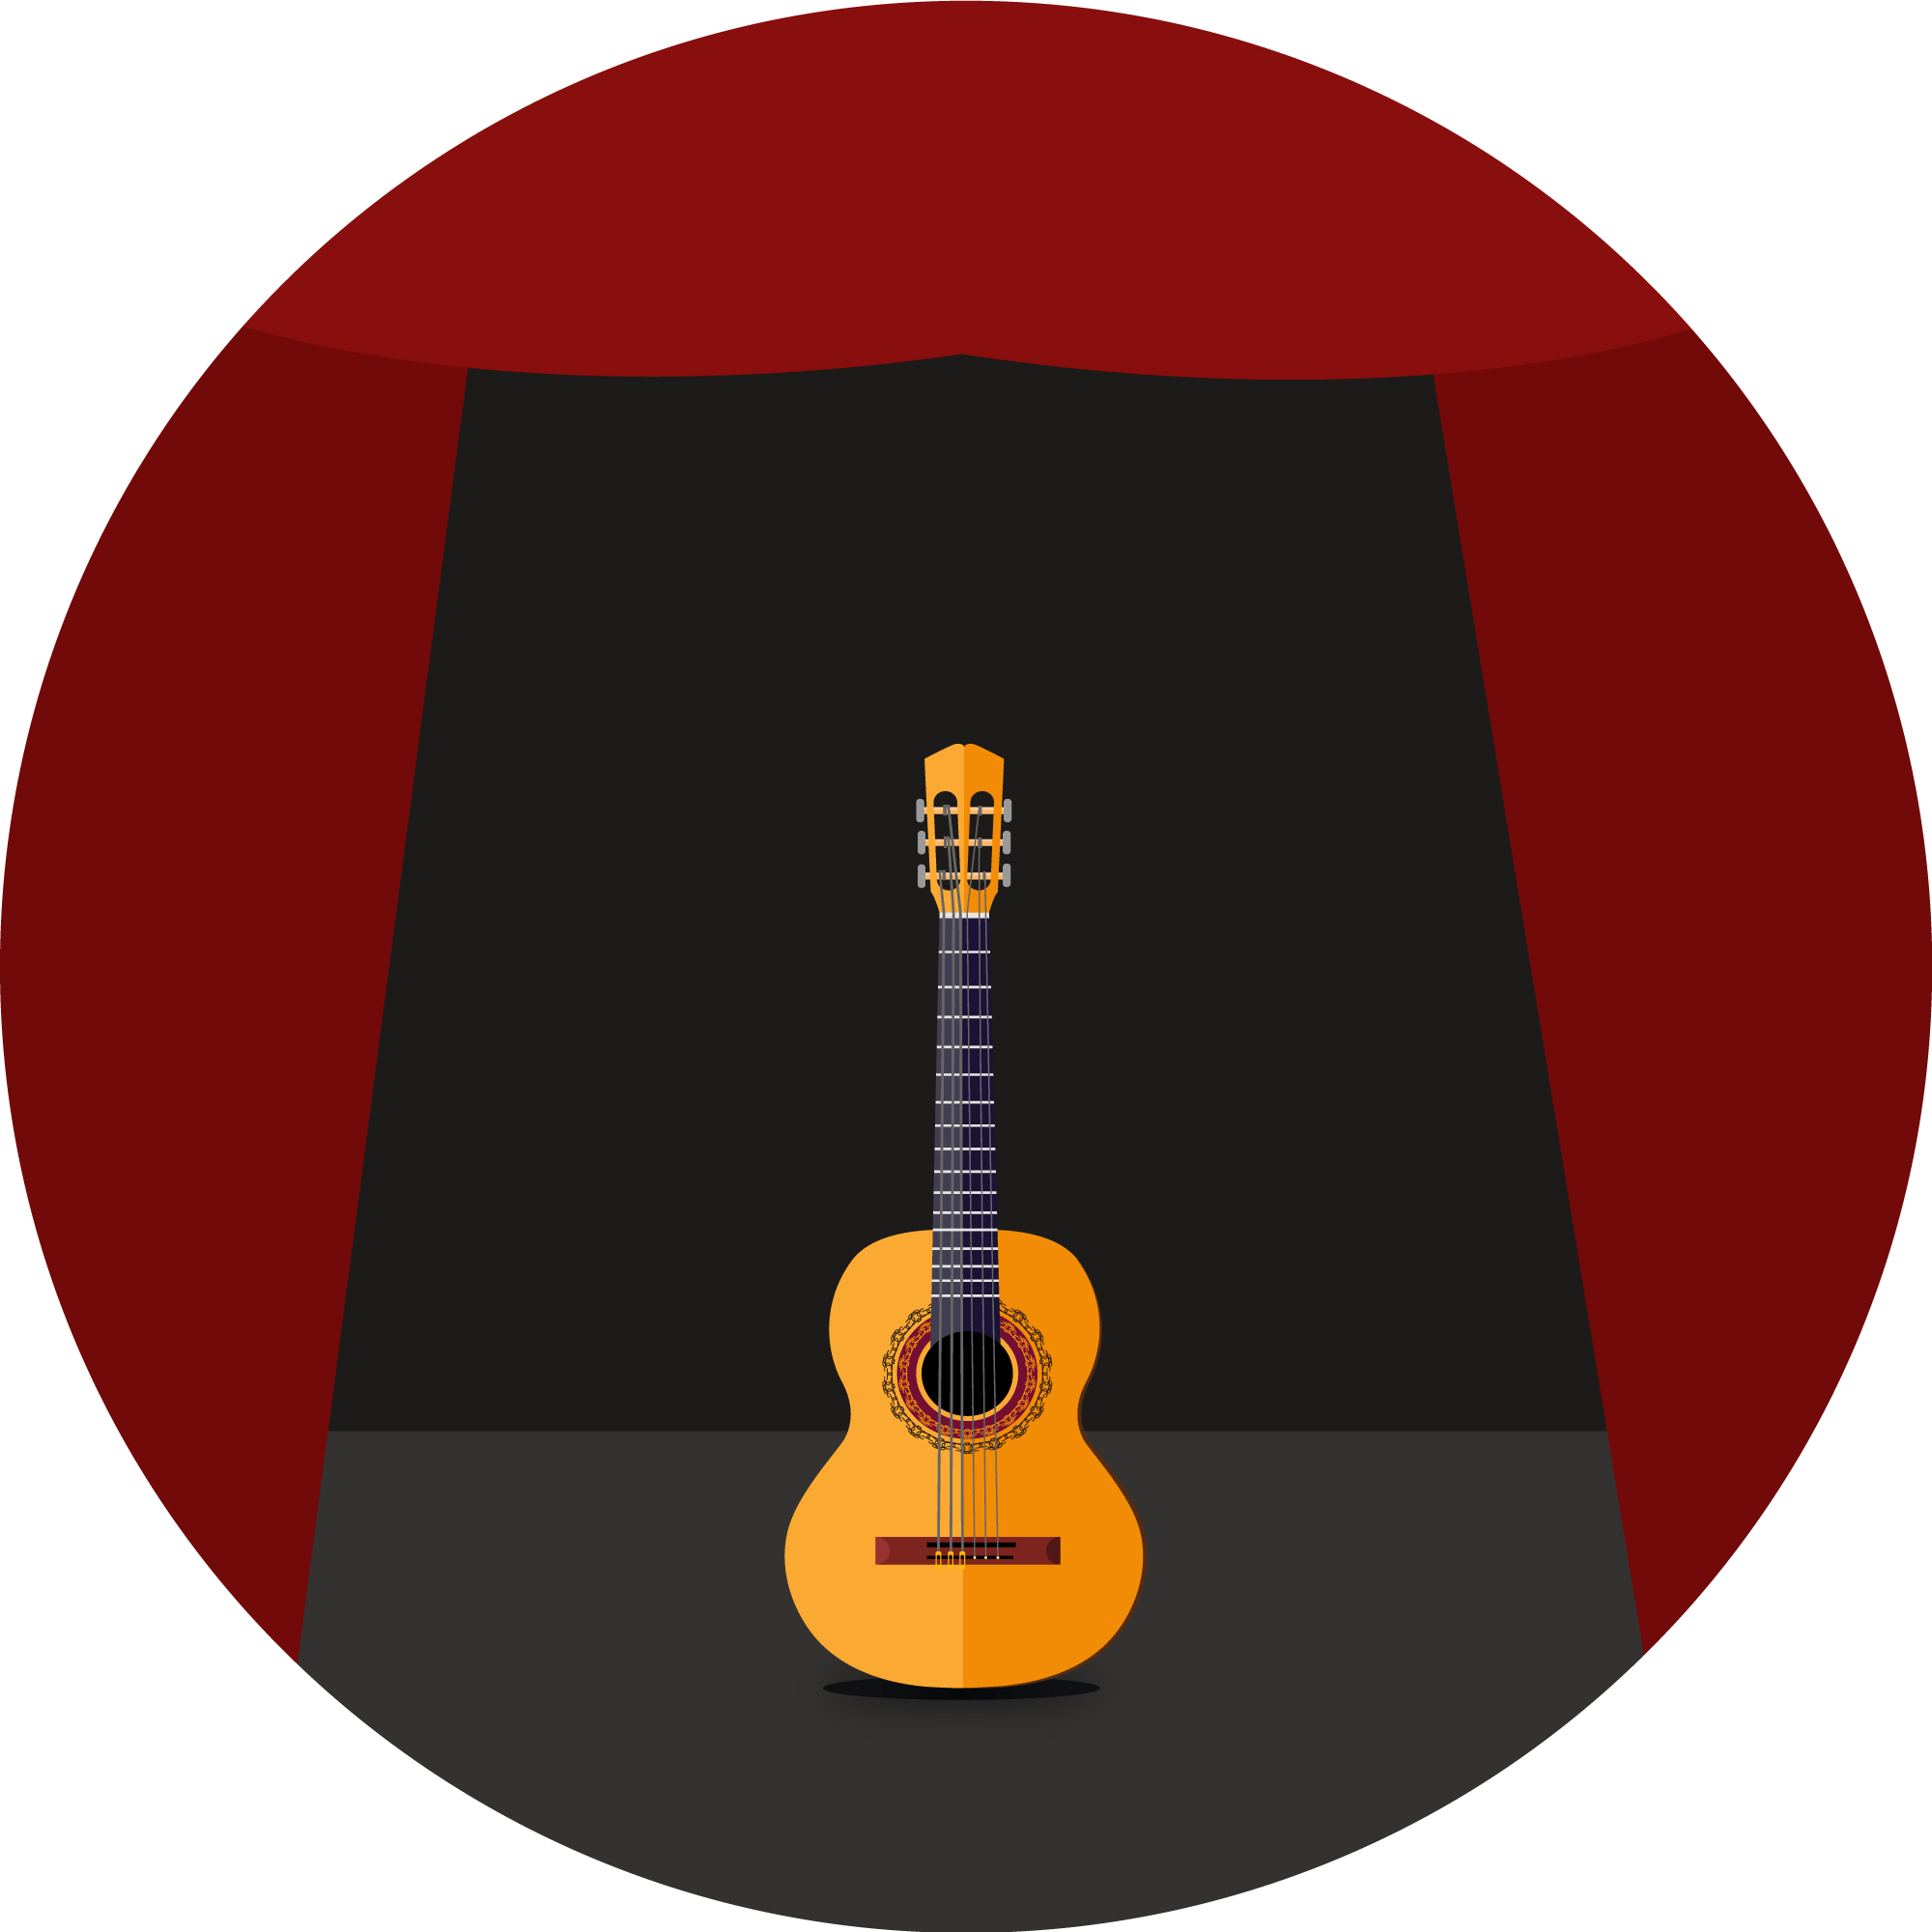 Guitar on stage illustration